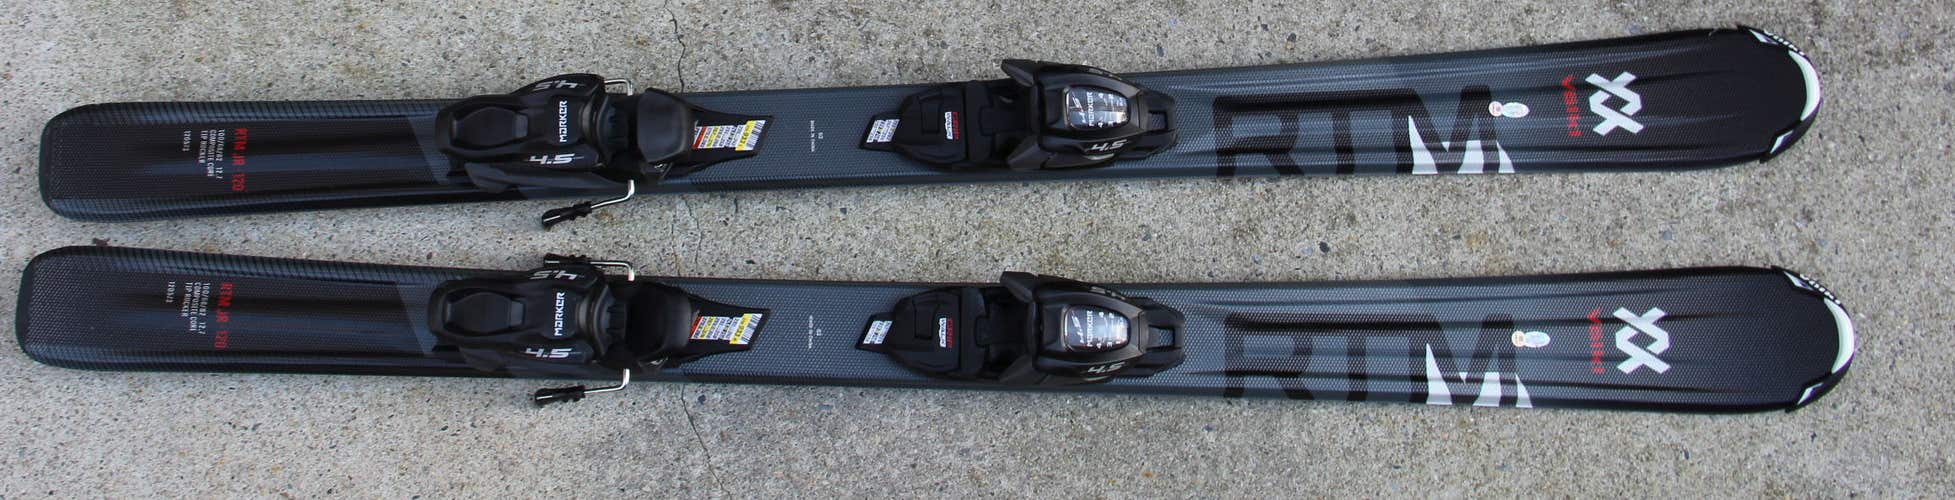 NEW 120cm Volkl RTM JR kids Skis with mount size adjustable Bindings on skis